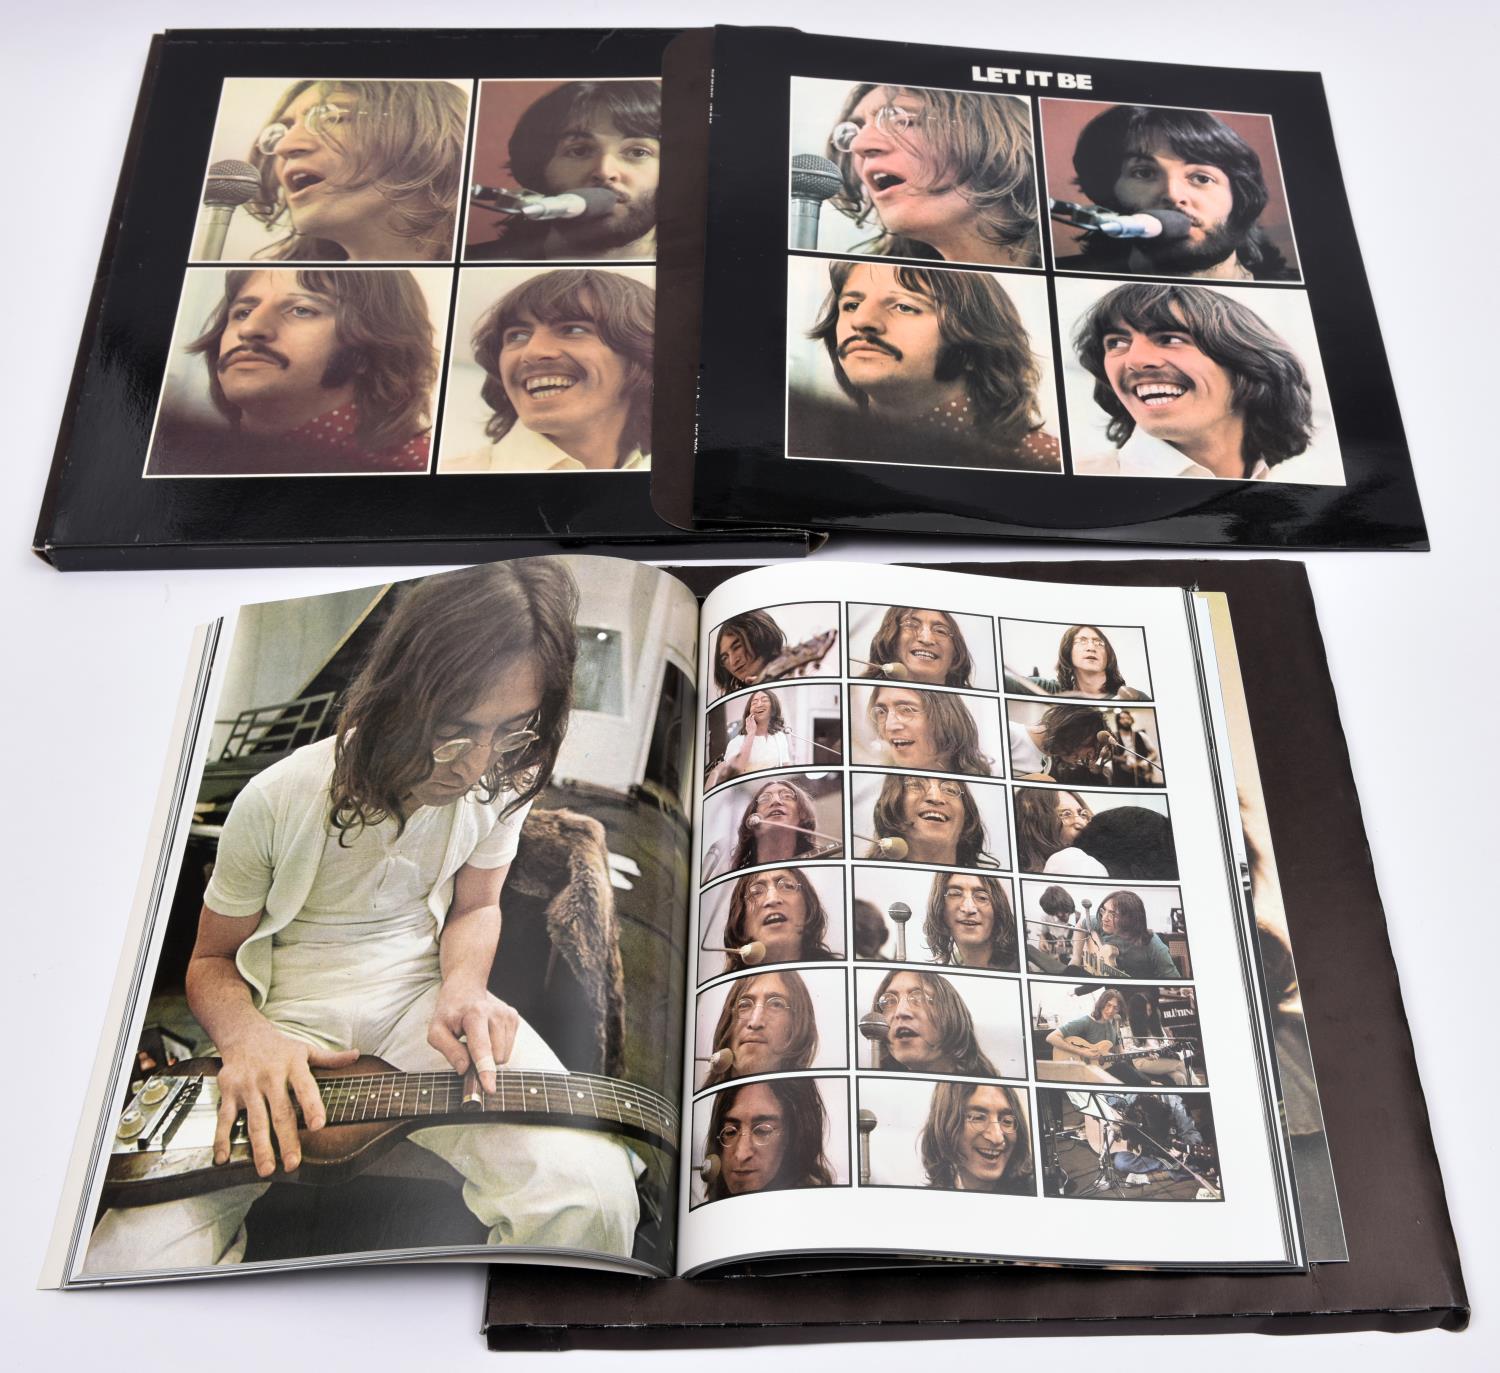 The Beatles - Let It Be 'box set'. Apple stereo 12" vinyl. Mfd in UK. 1970, YEX 773-2U. With book;